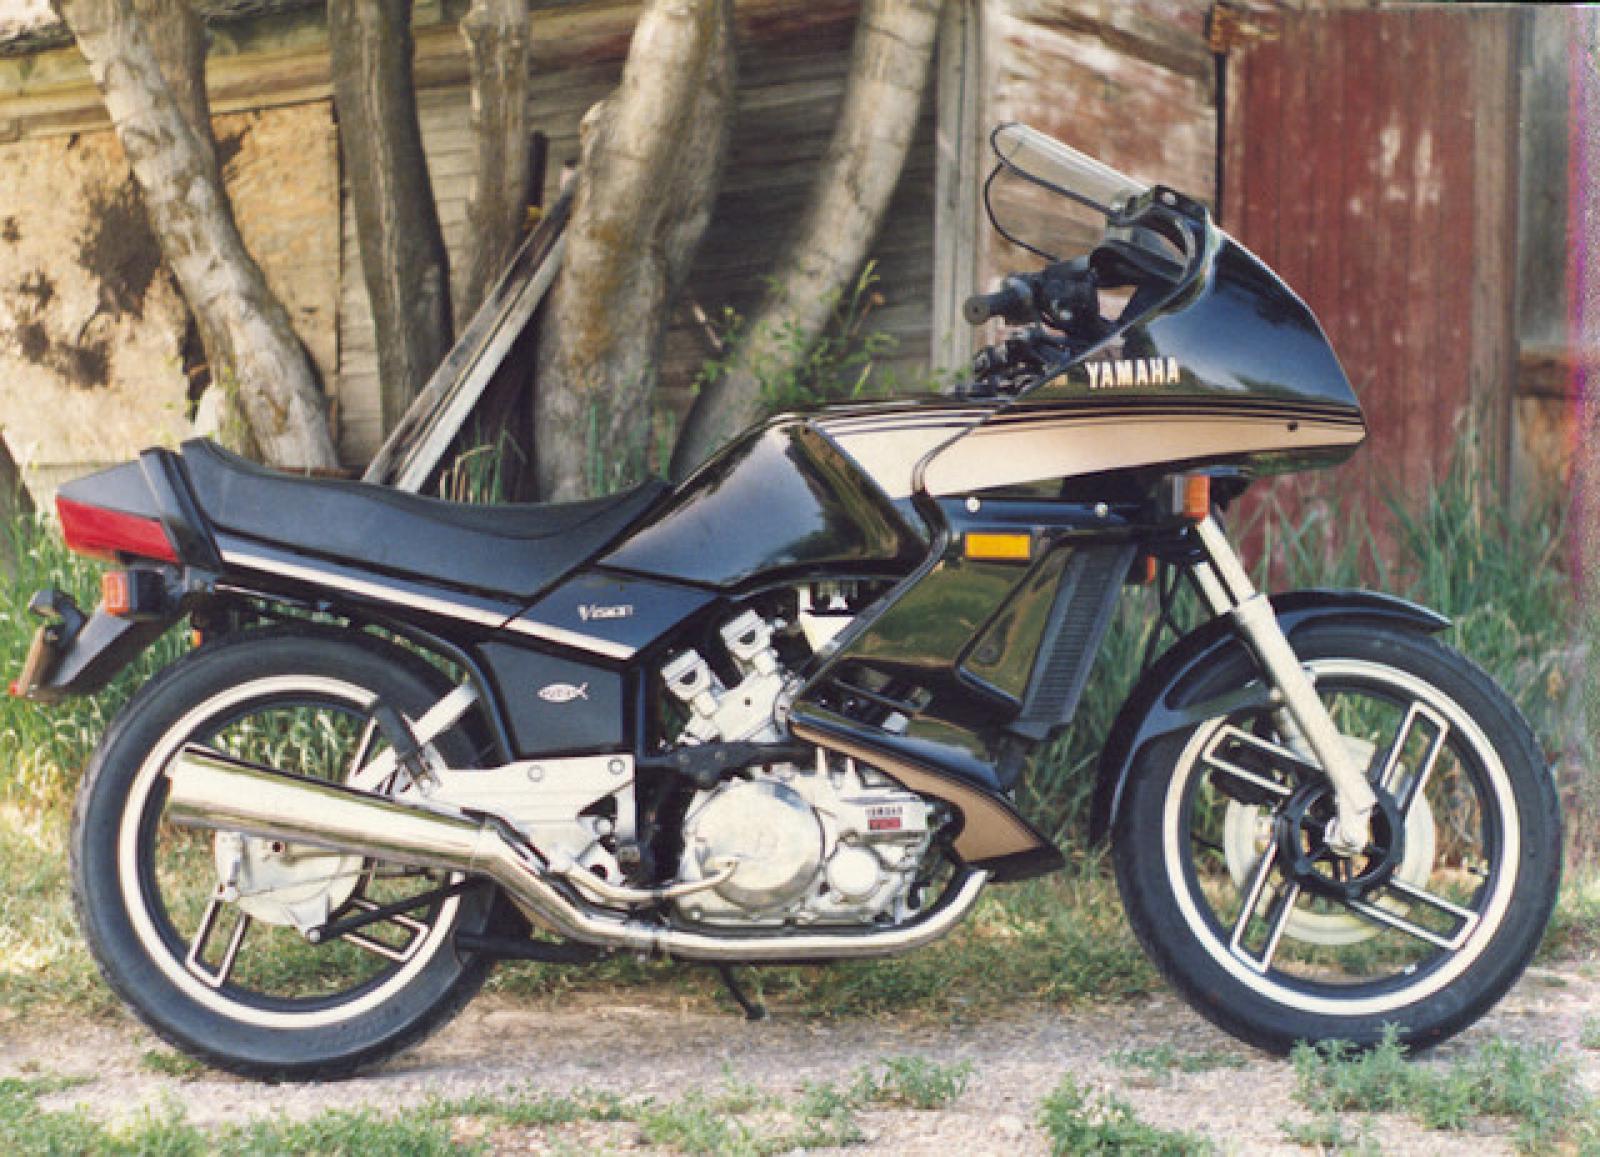 1983 Yamaha xz 550 - GarrySyl - Shannons Club